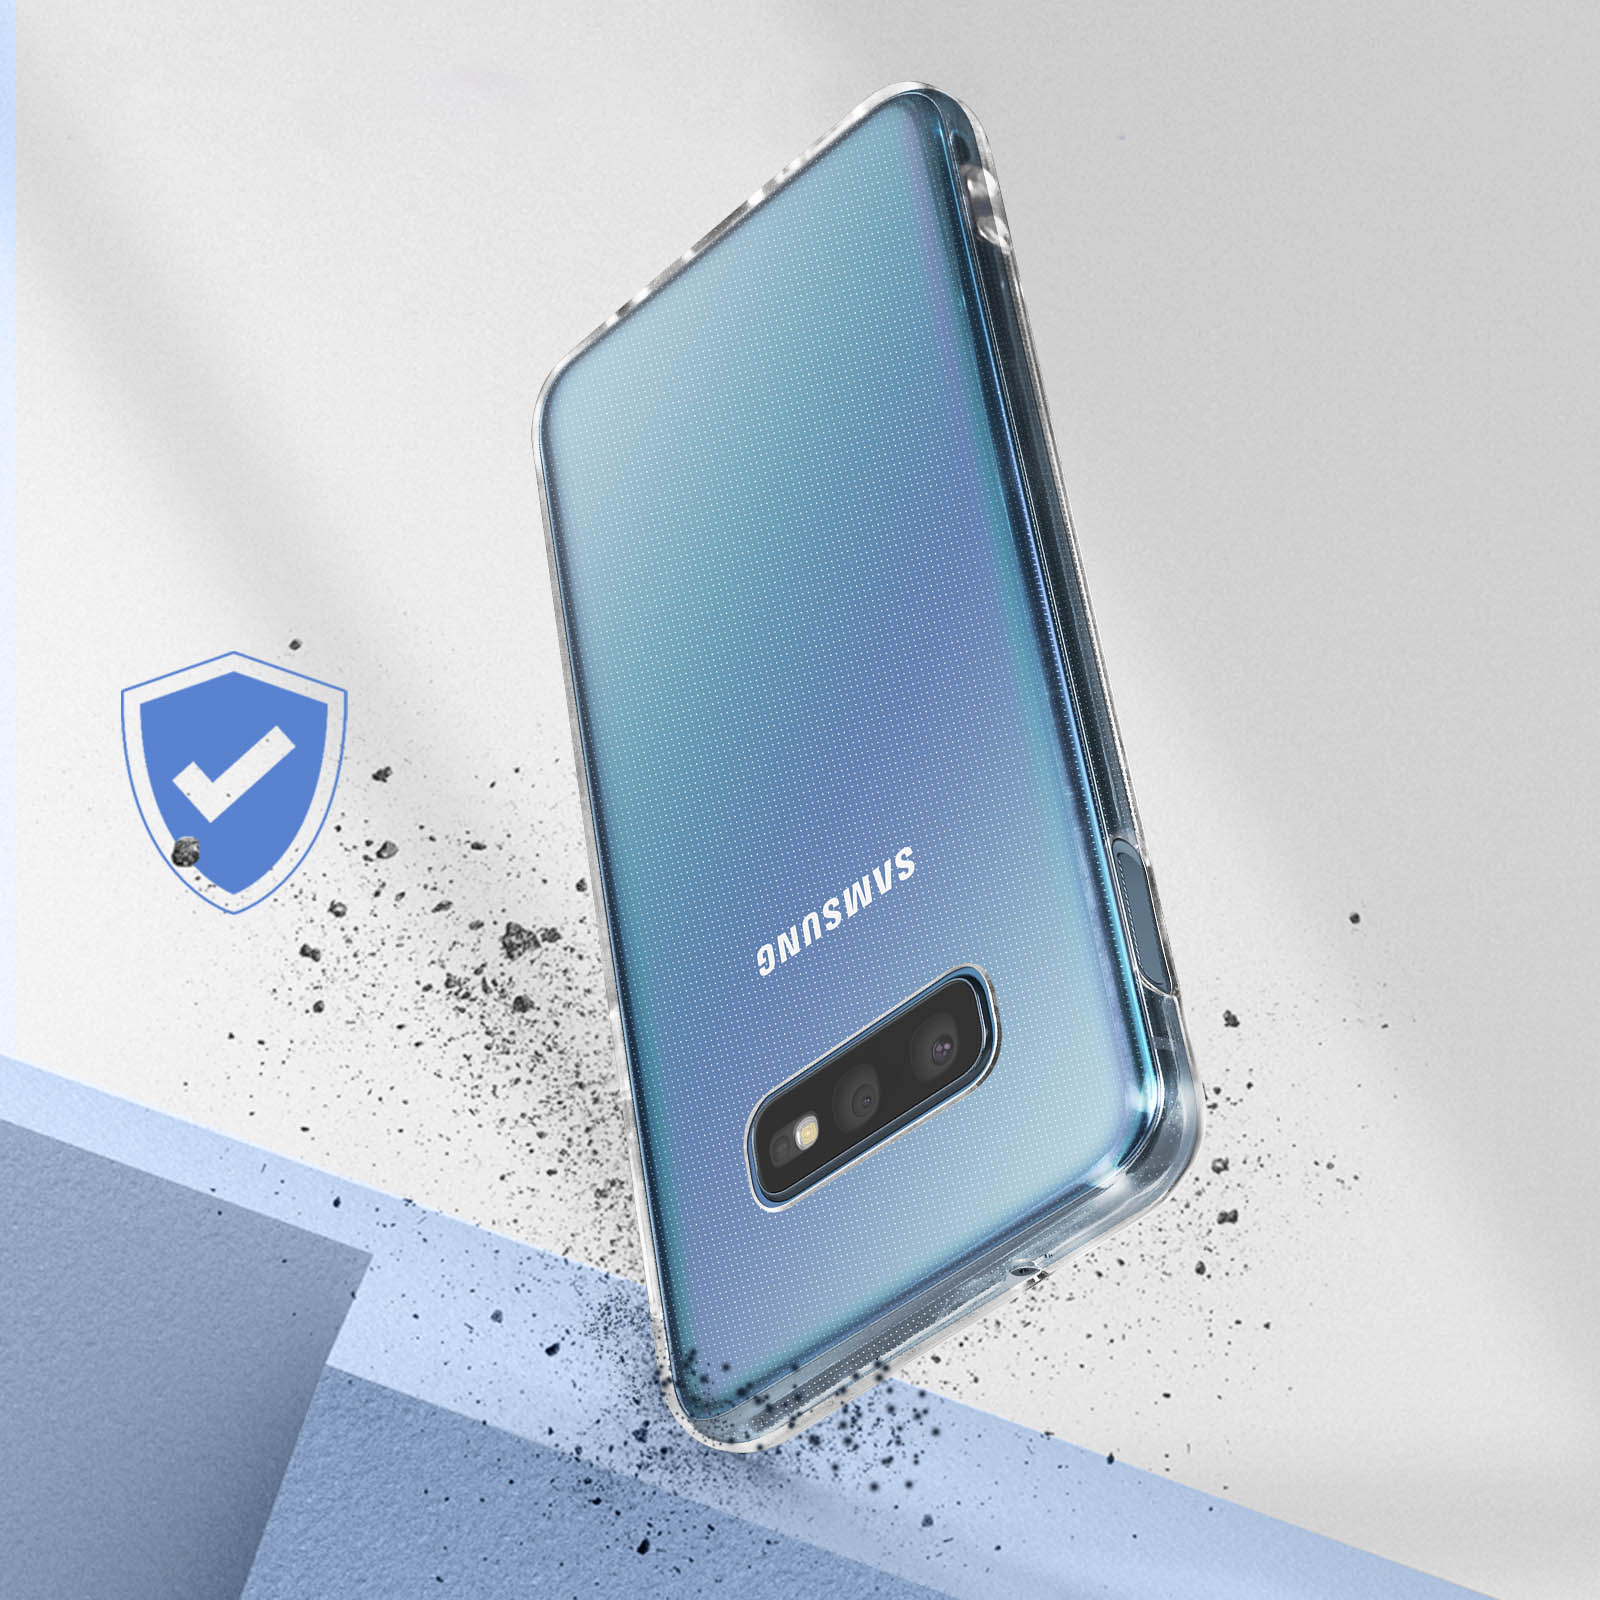 AVIZAR Transparent Samsung, Gelhülle Galaxy S10e, Series, Backcover,